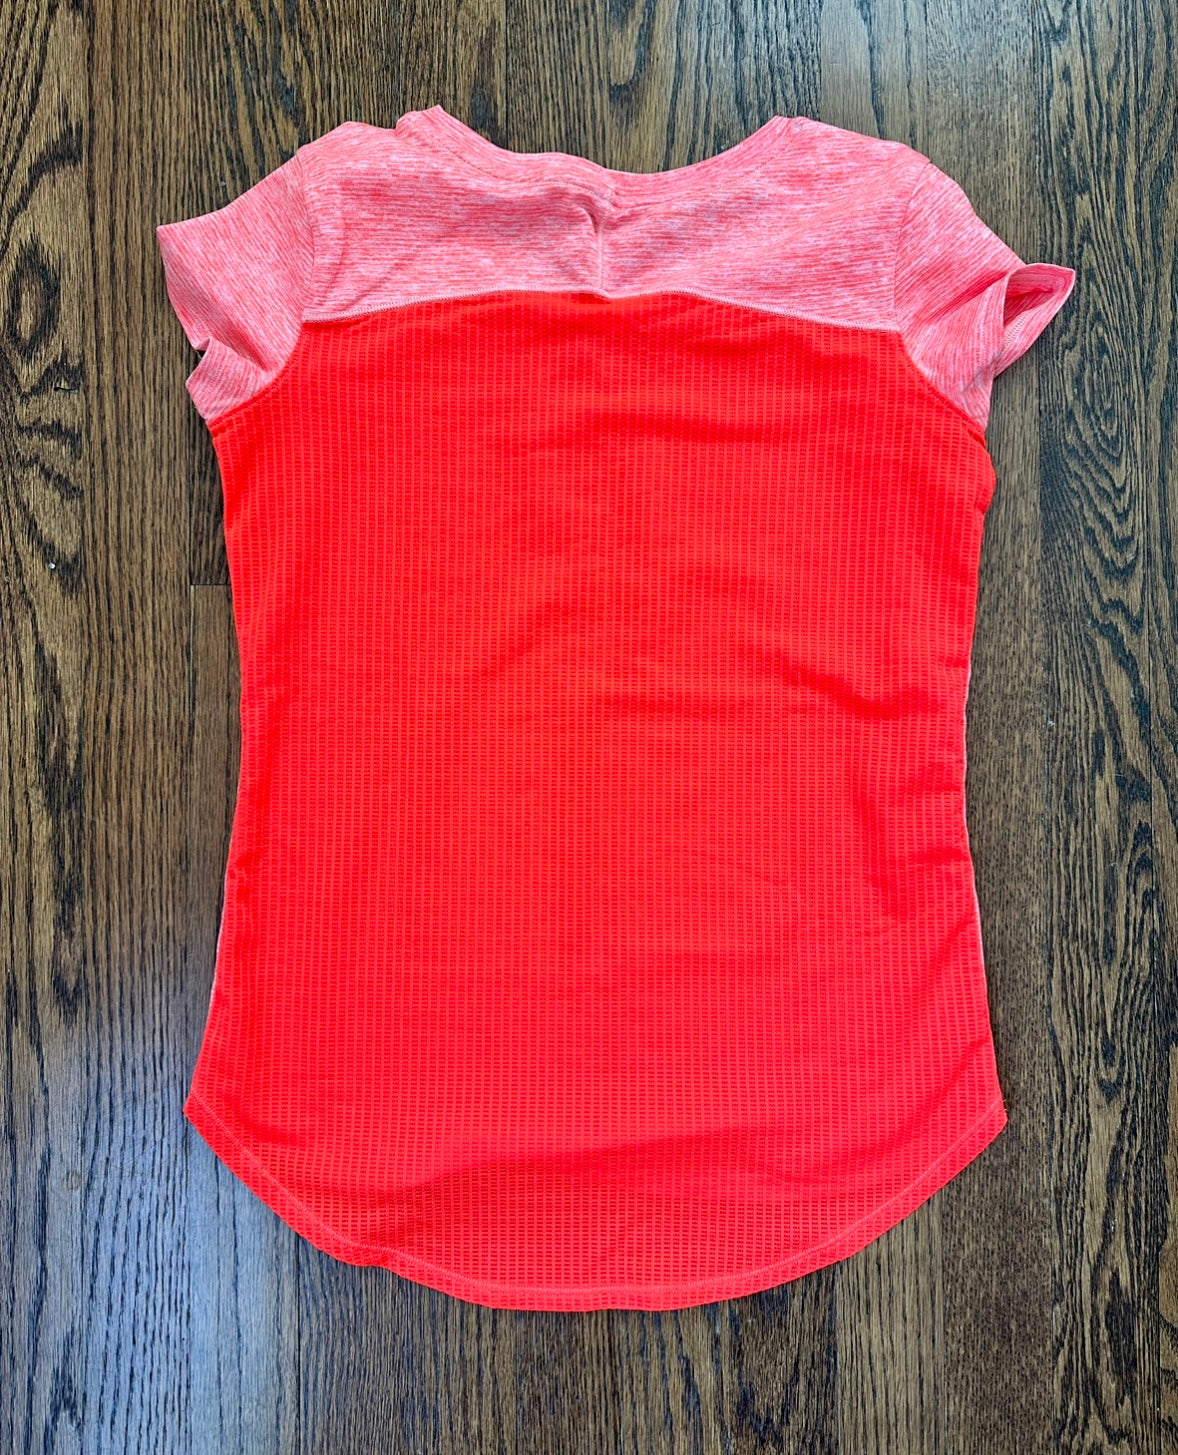 Women's Under Armour Bright Orange Workout Shirt - size XS